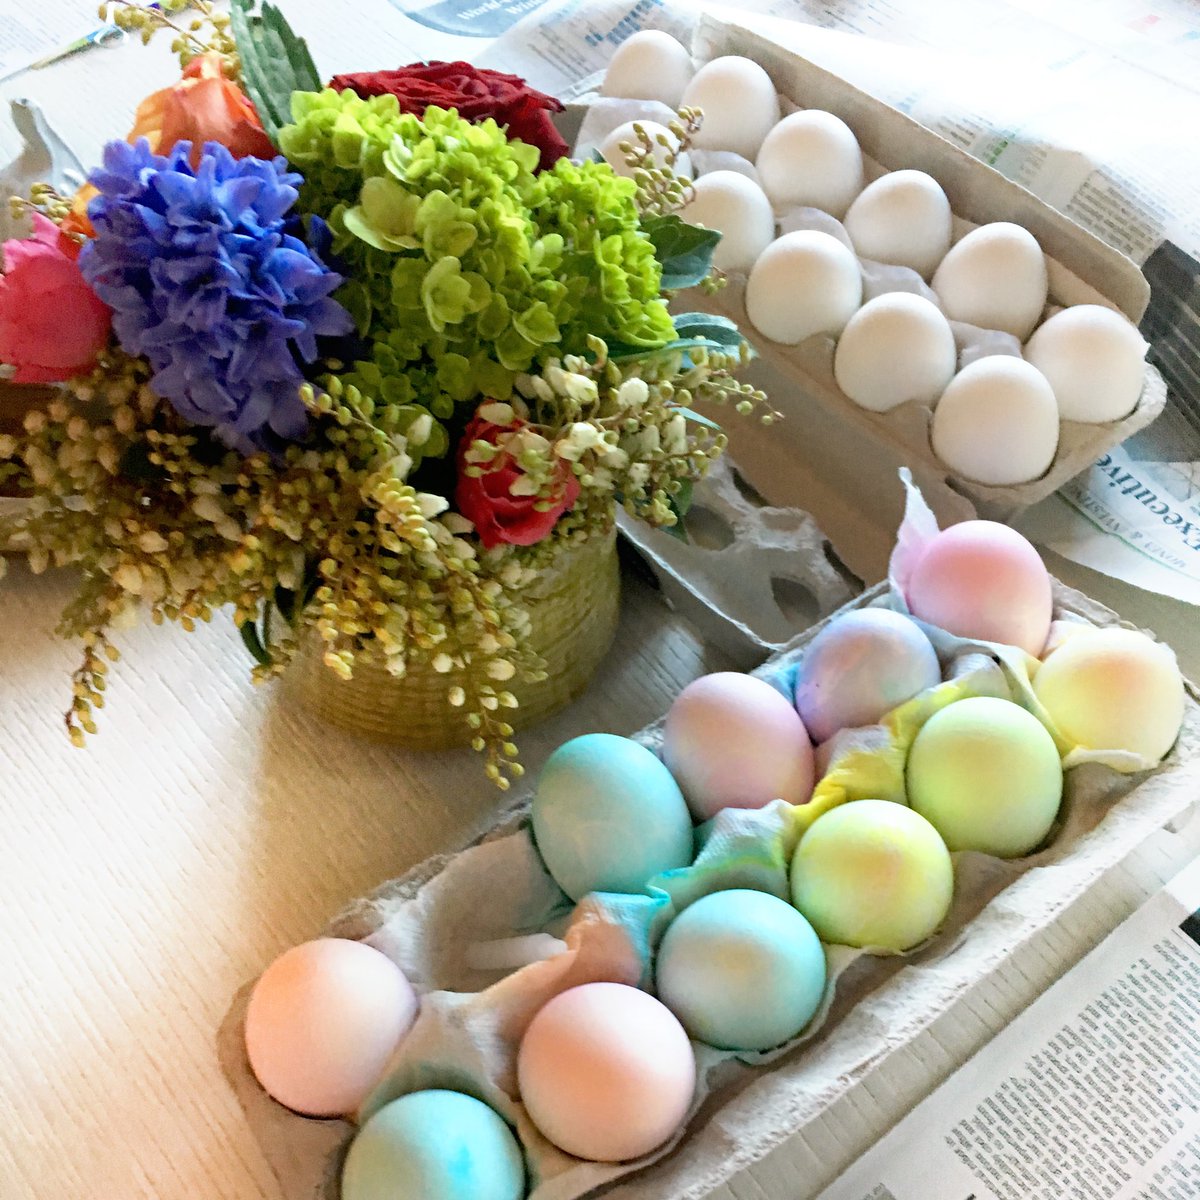 And so it begins... ???????????? #EasterEggHunt #FriYay #Eggscellent https://t.co/6xIIK52fQN